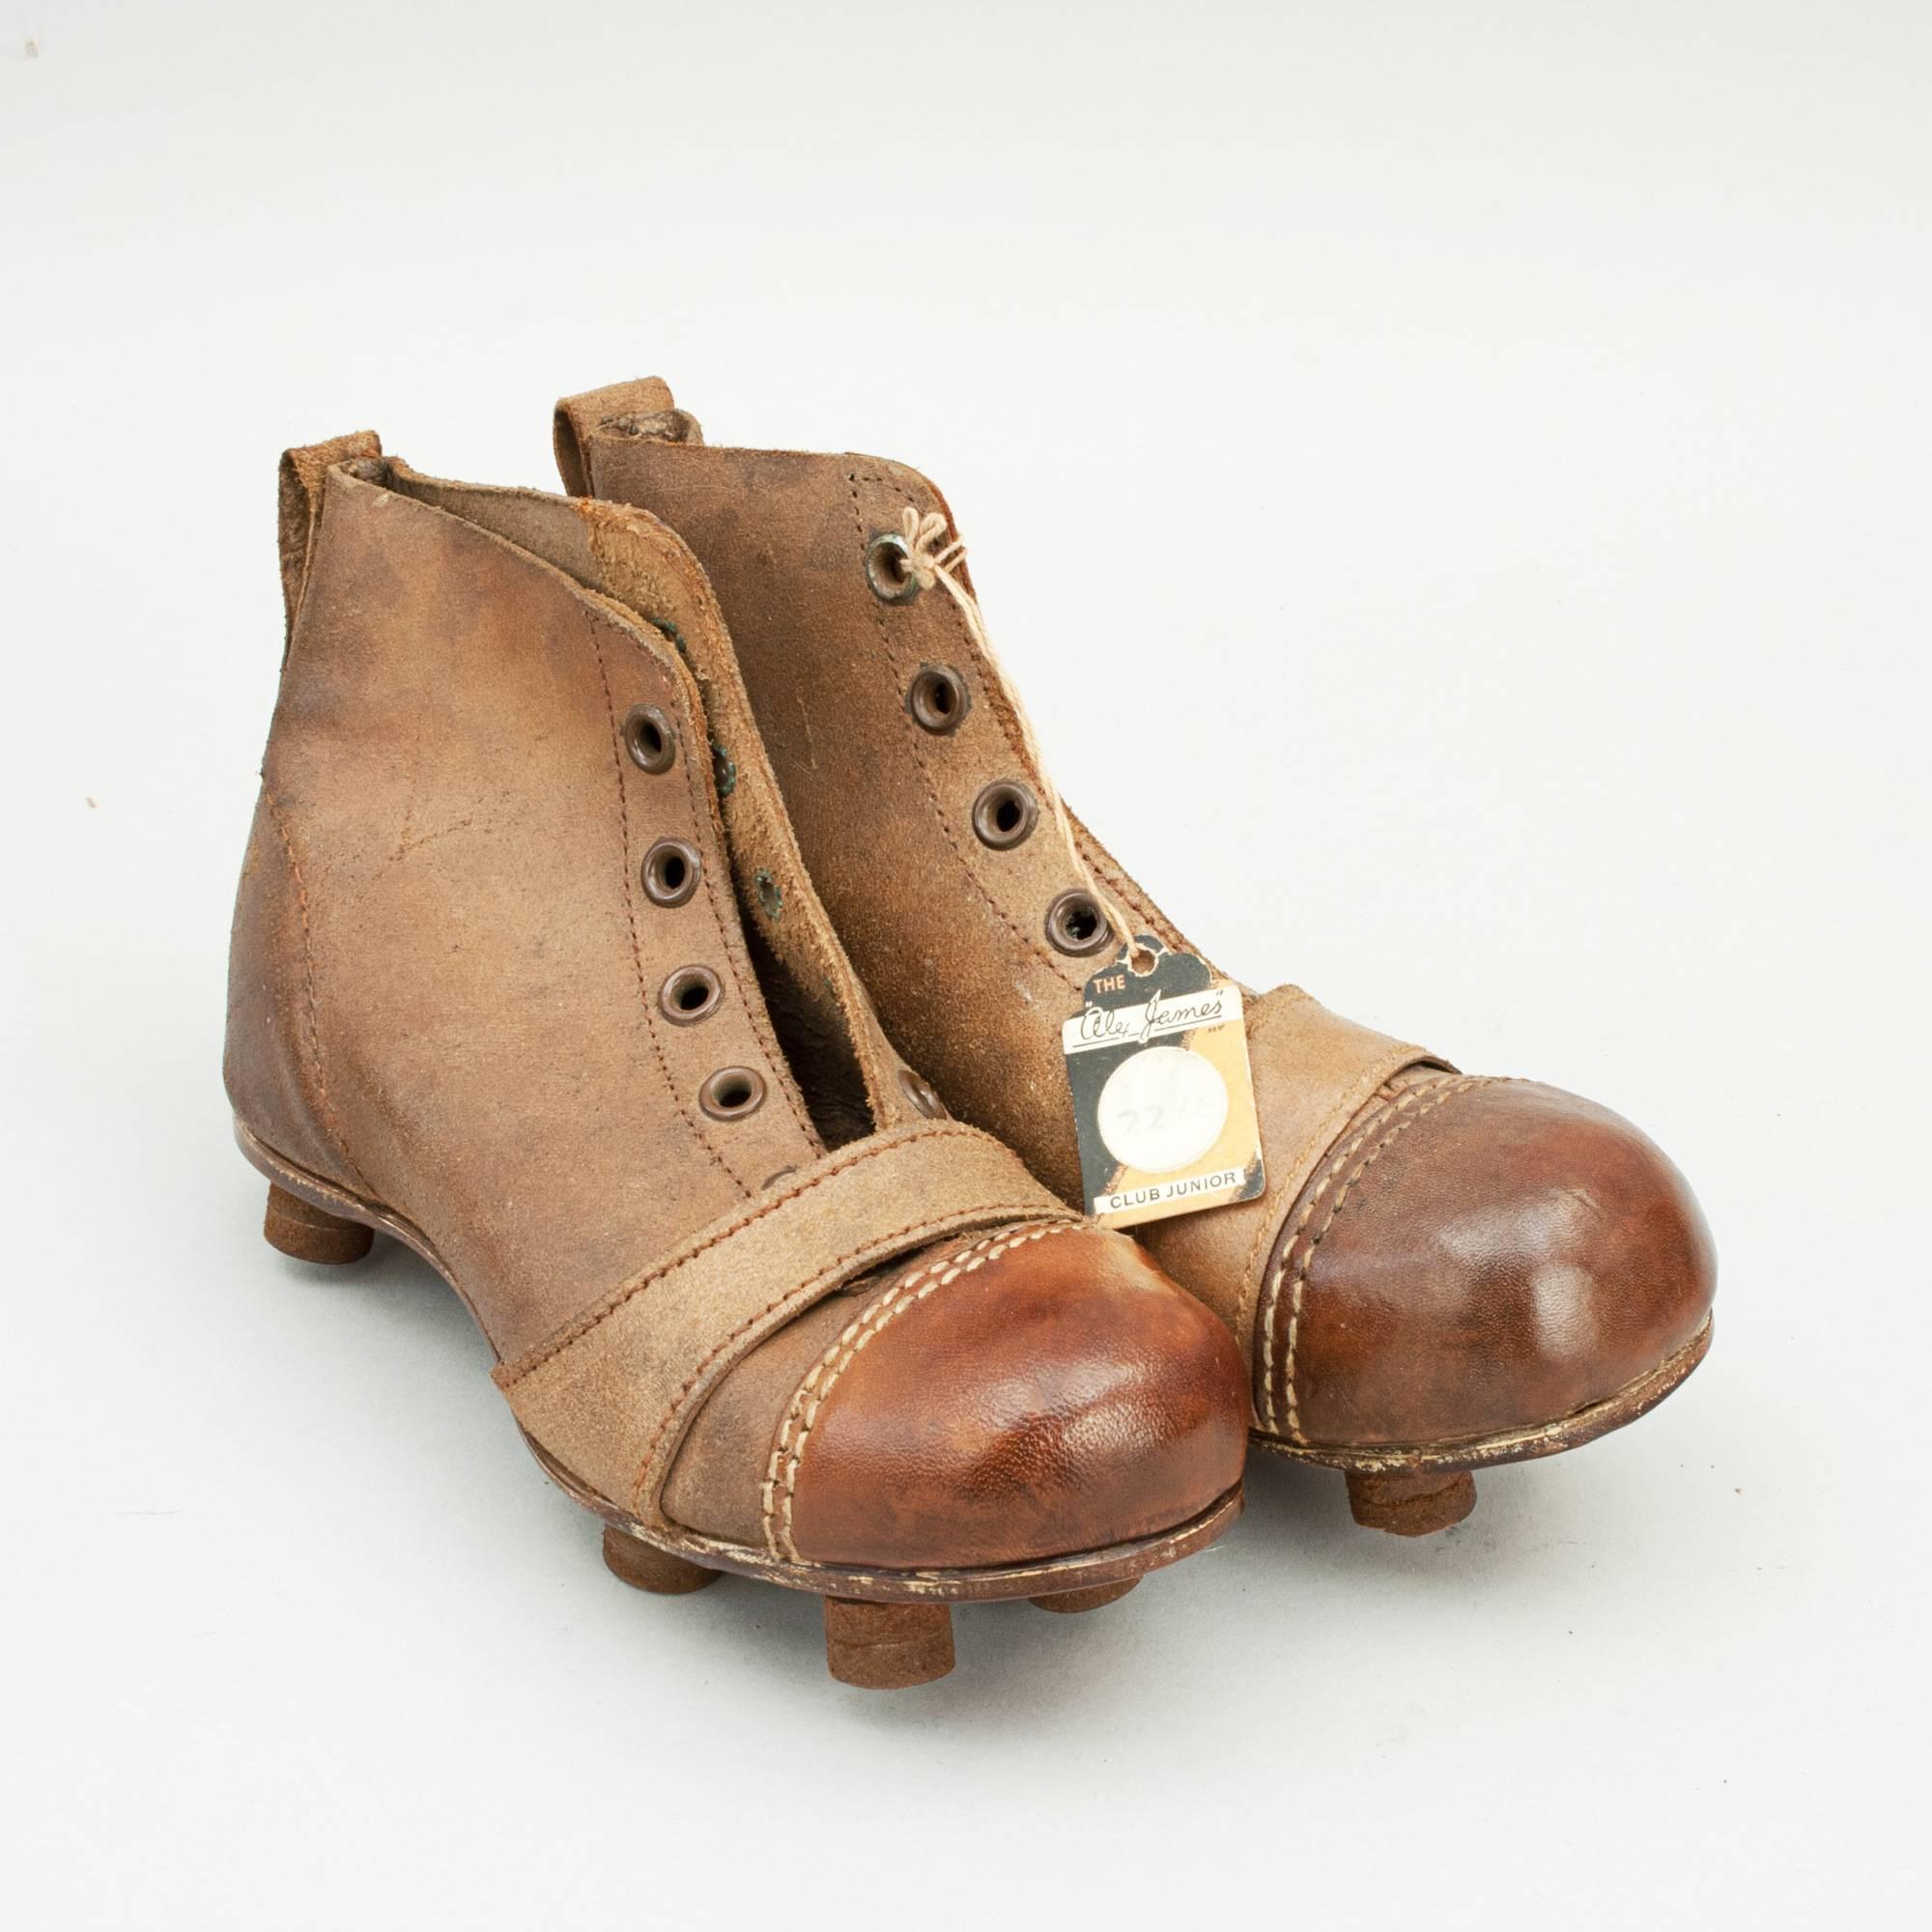 Leather Alex James Club Junior Football Boots